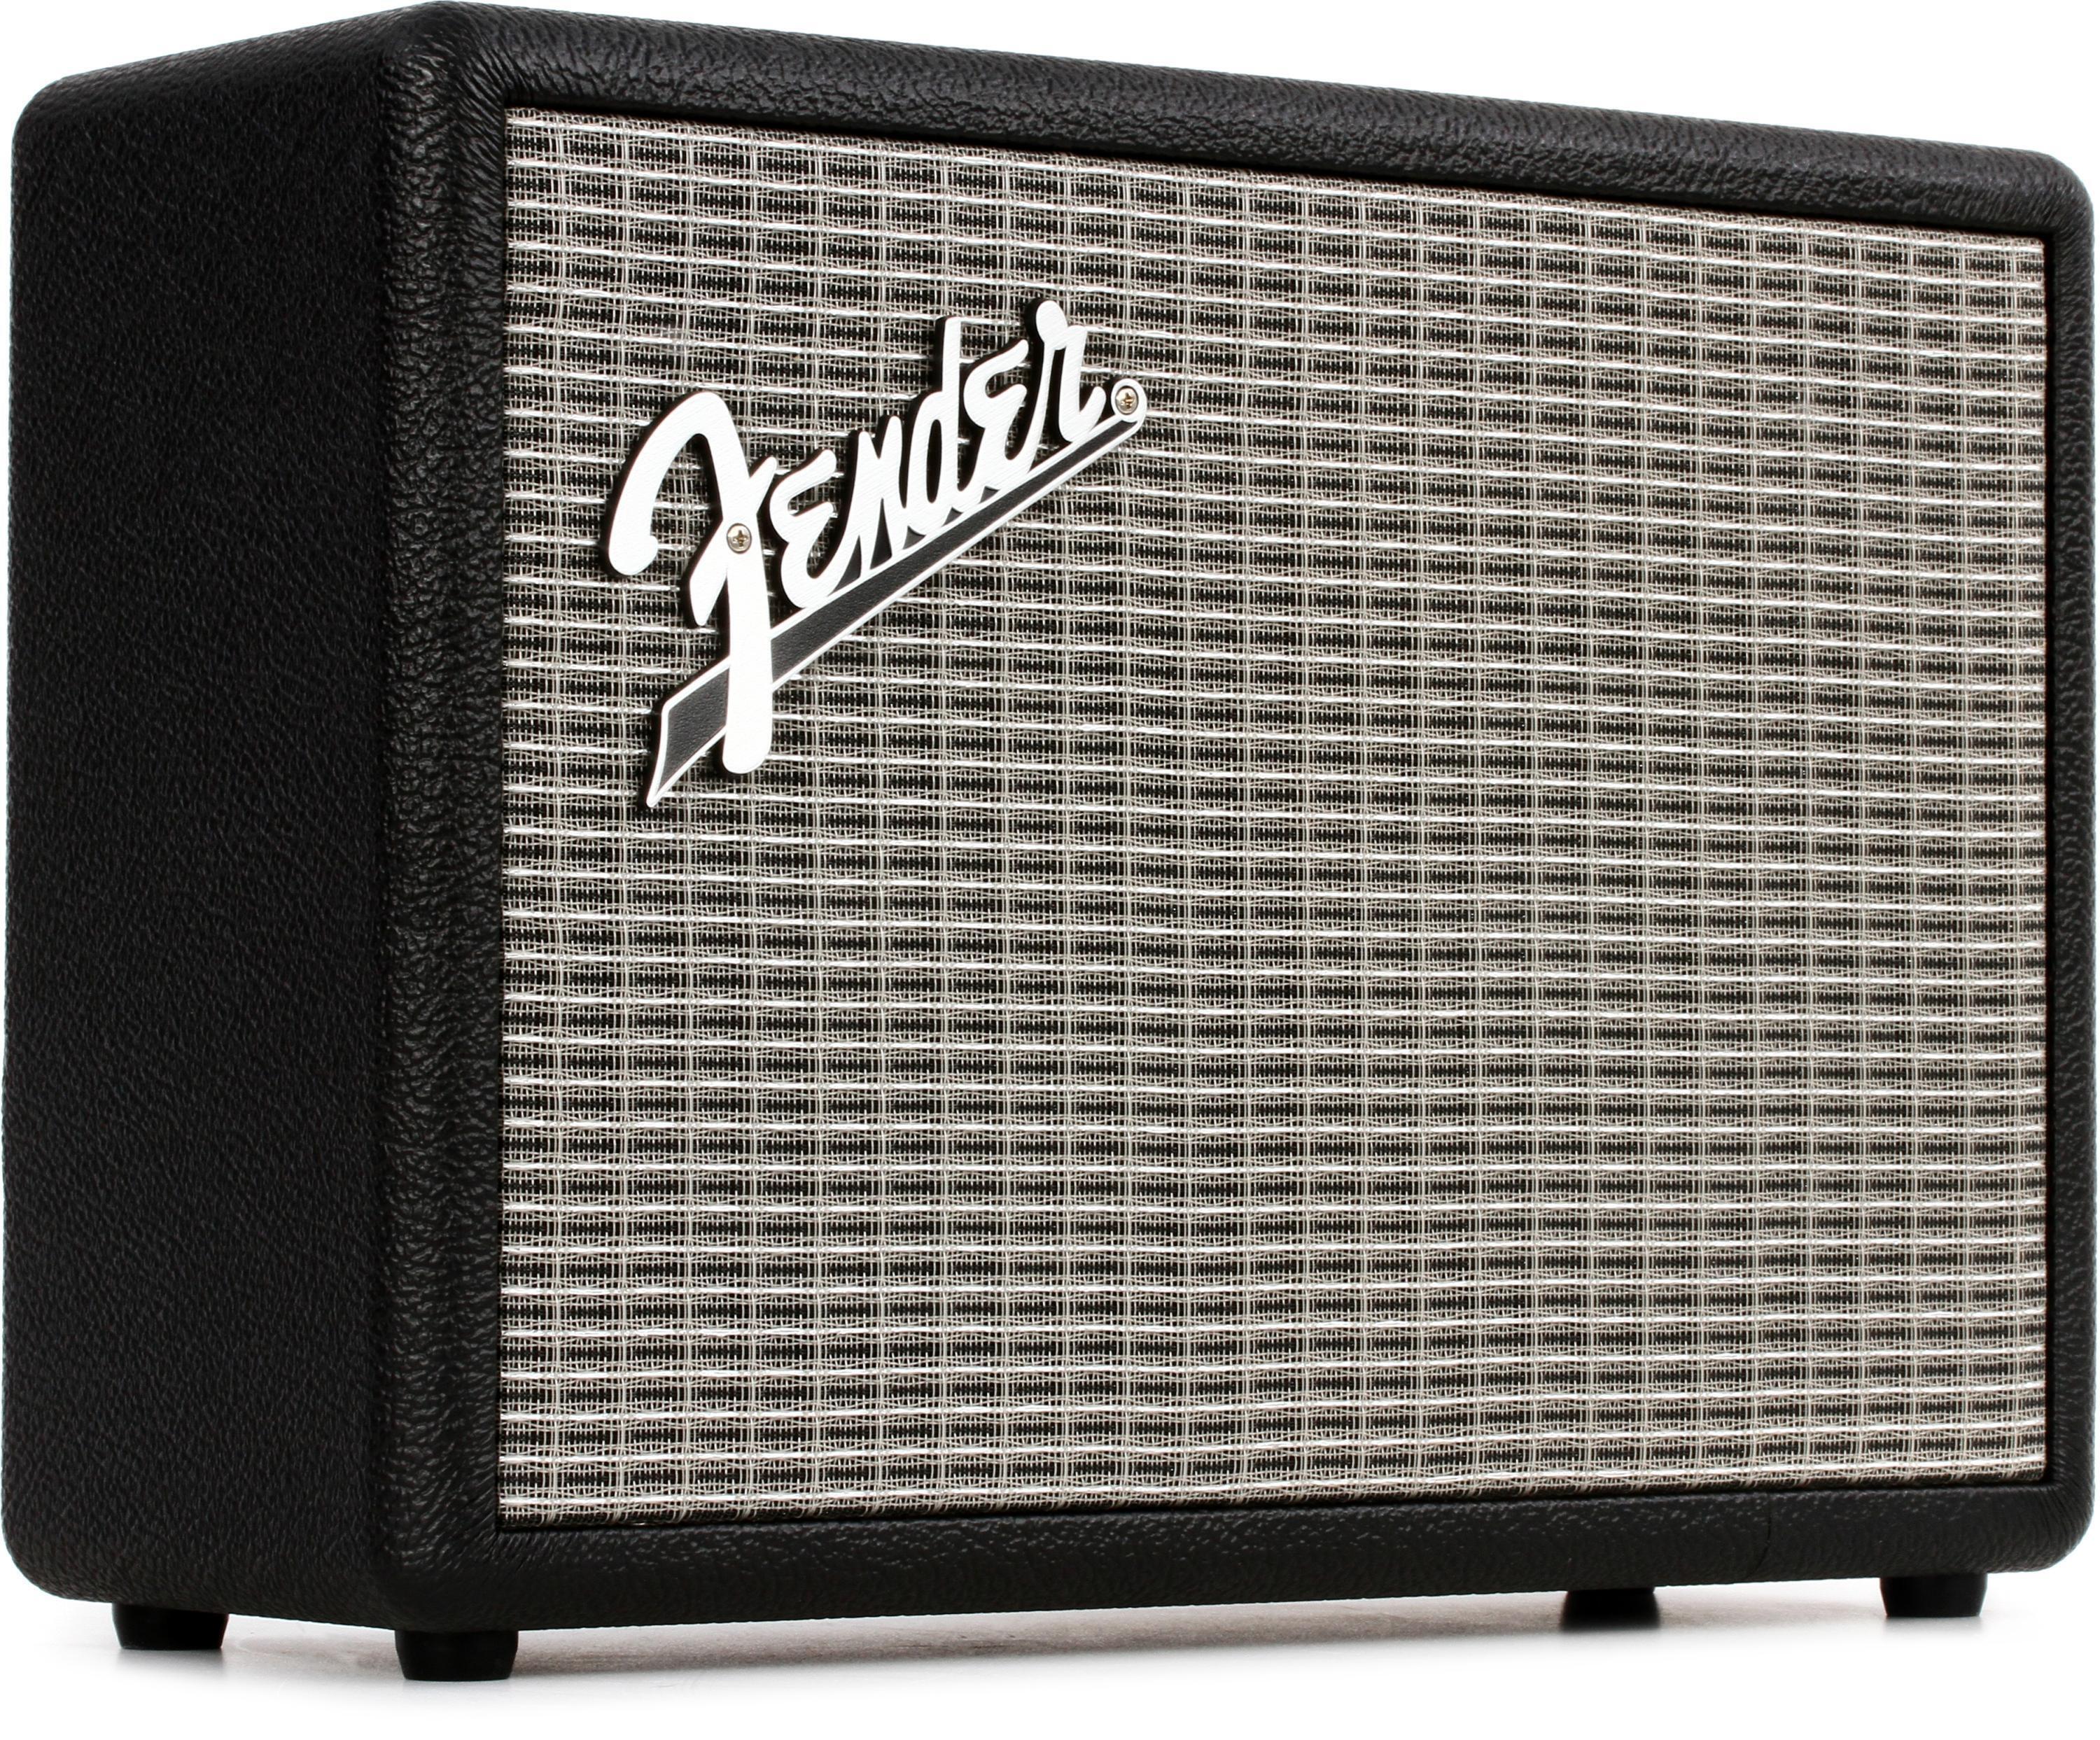 Fender Monterey Portable Bluetooth Speaker - Black Reviews